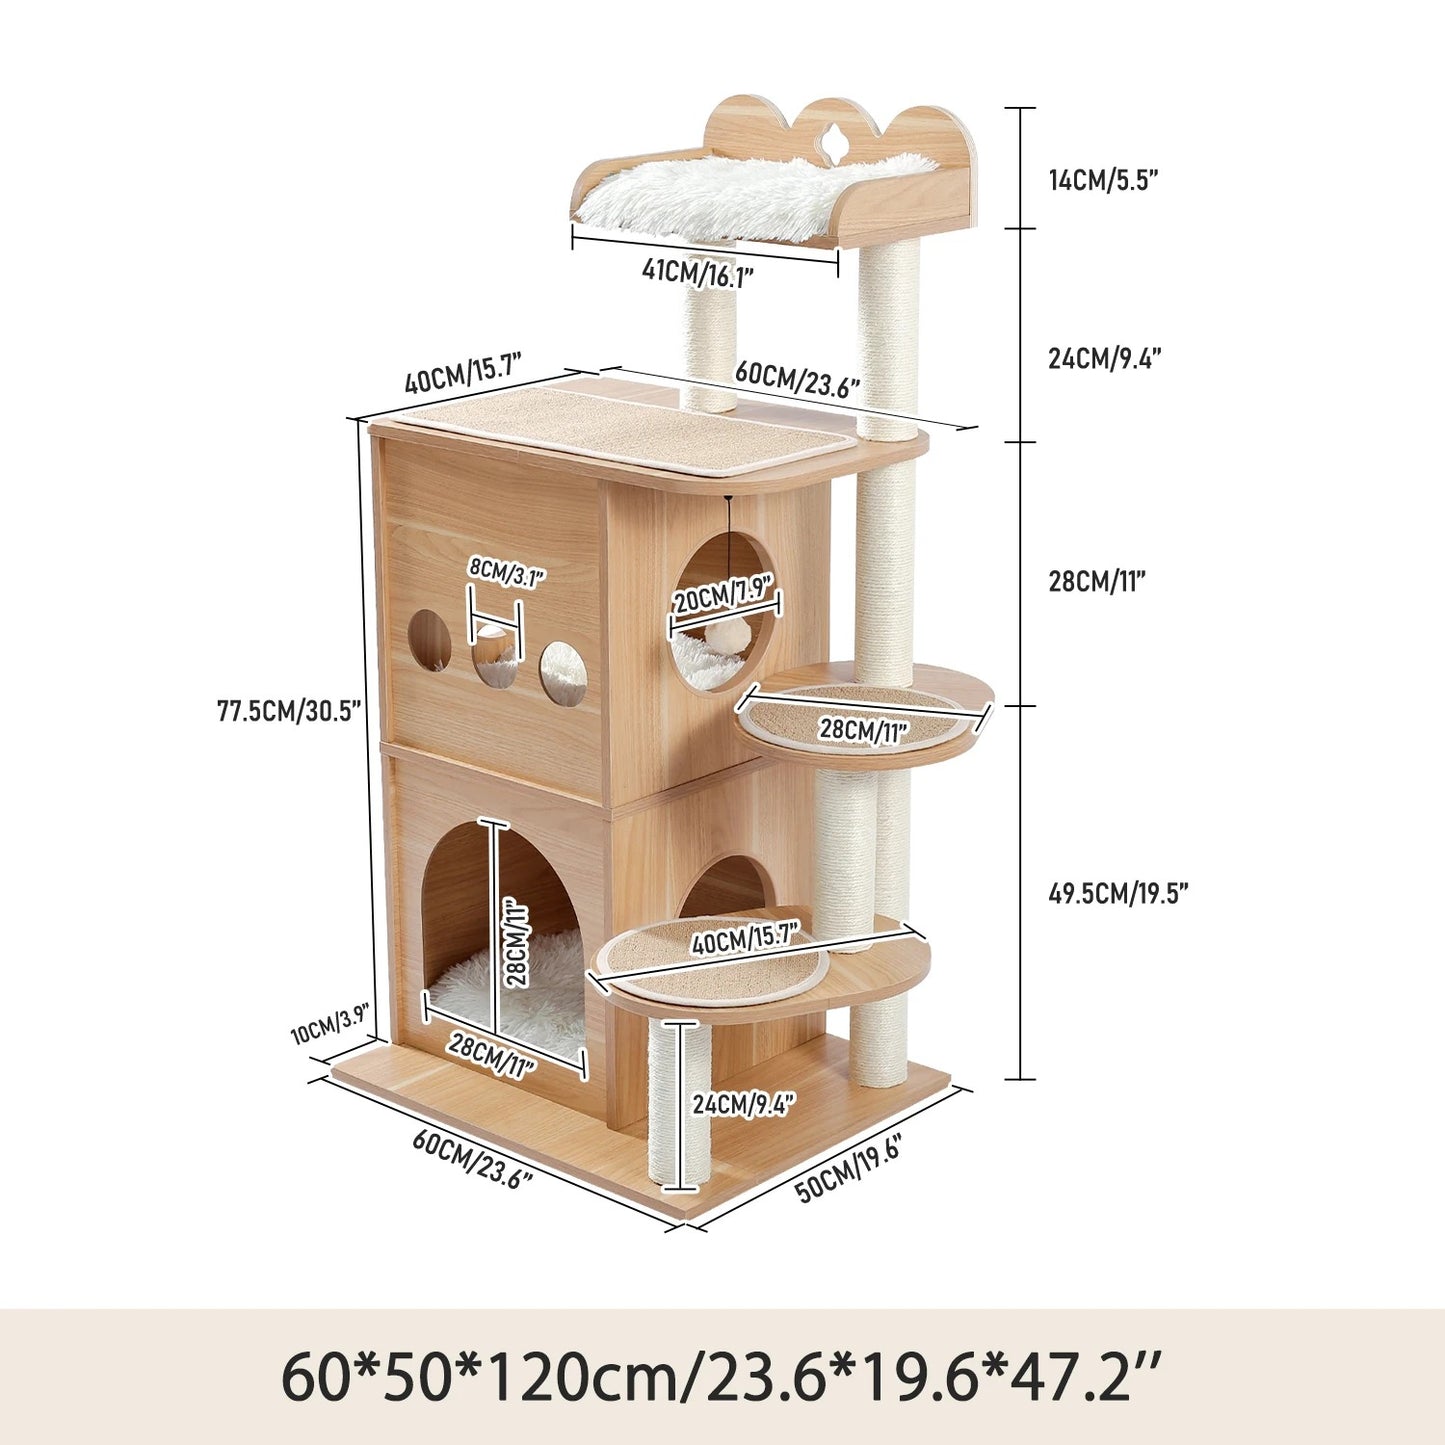 CozyCats 47" Luxury Wooden Cat Tree Tower